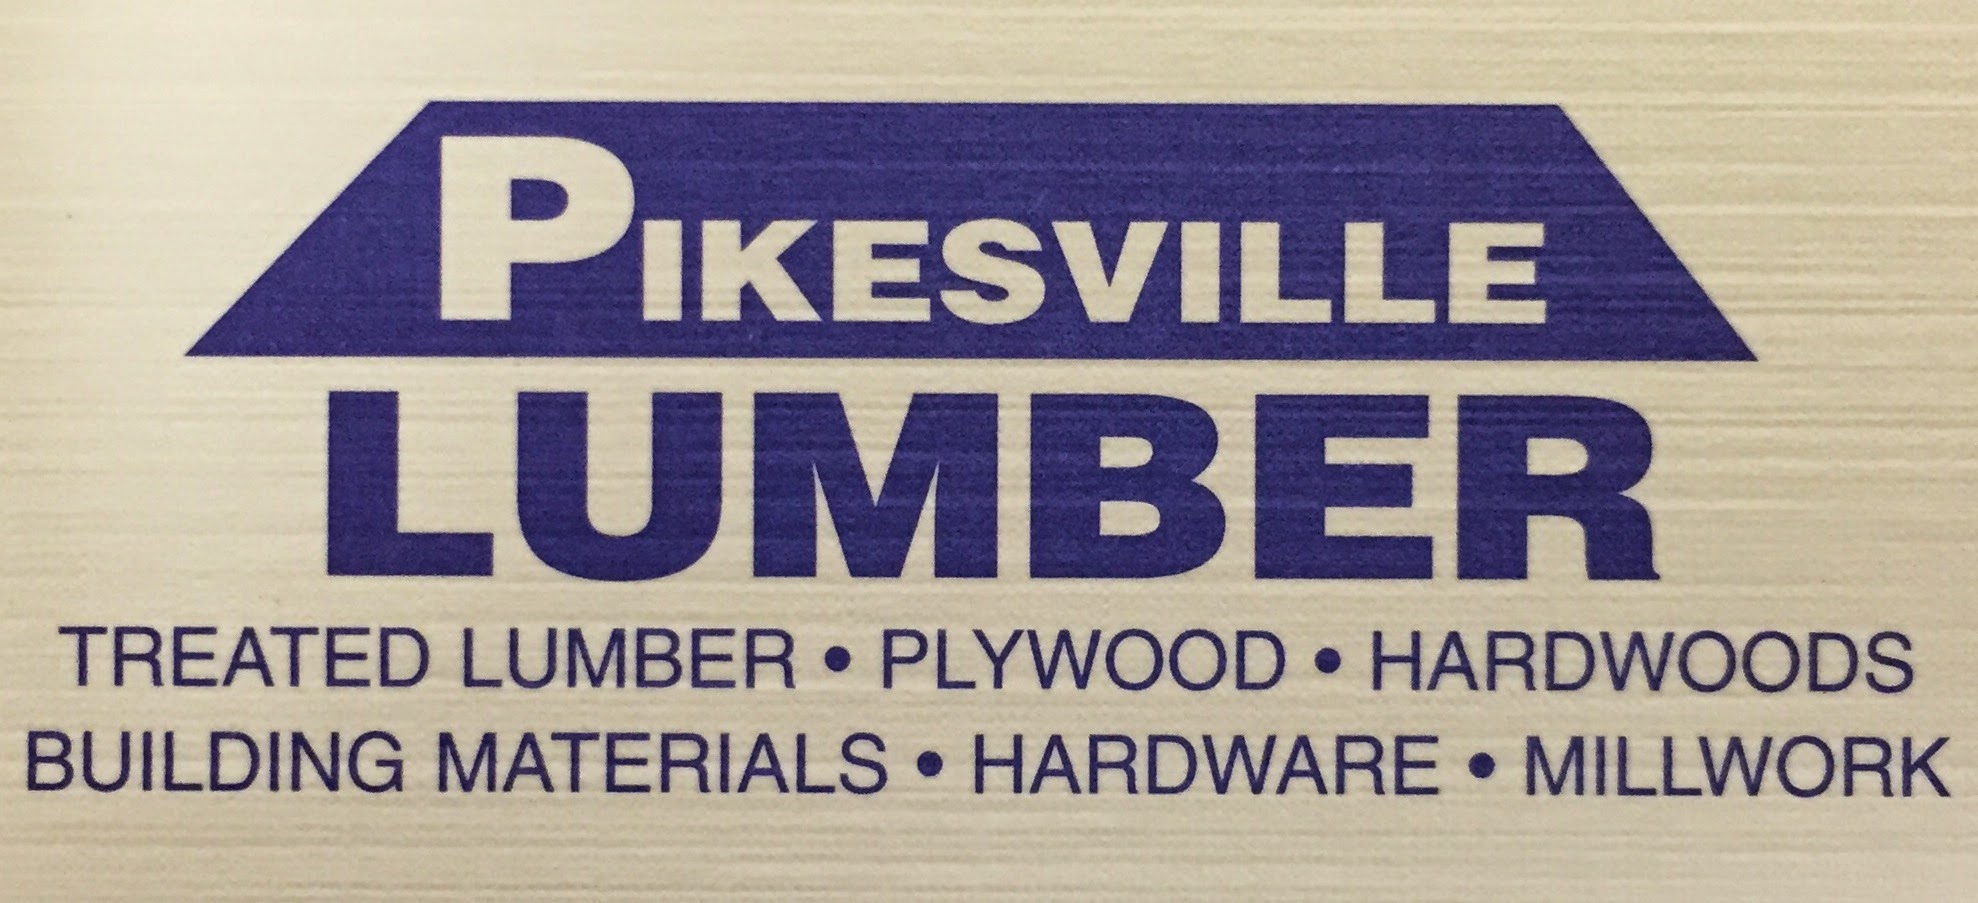 Pikesville Lumber Company